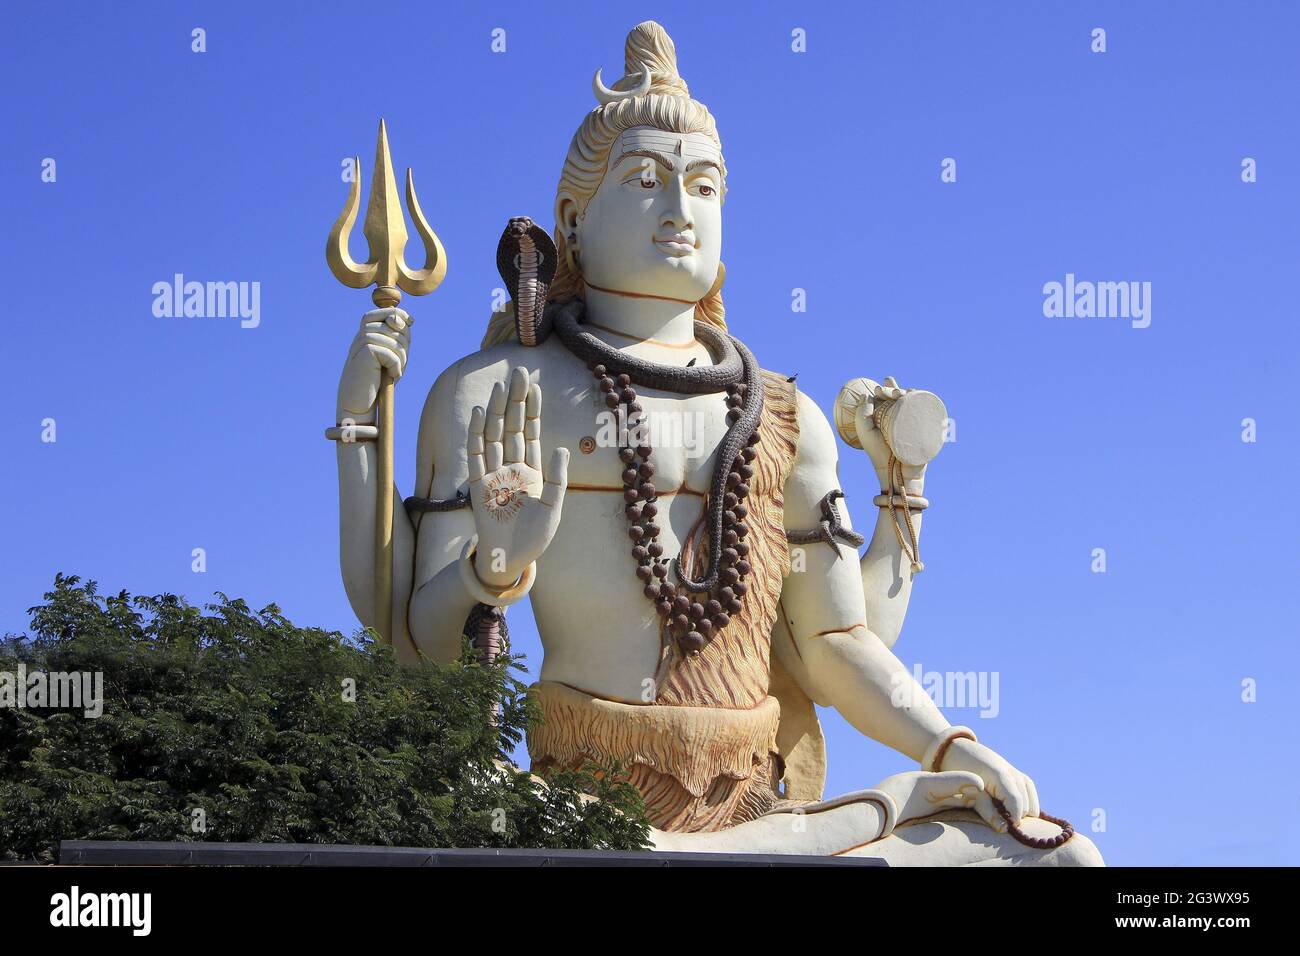 Lord Shiva dans Serene pose Banque D'Images